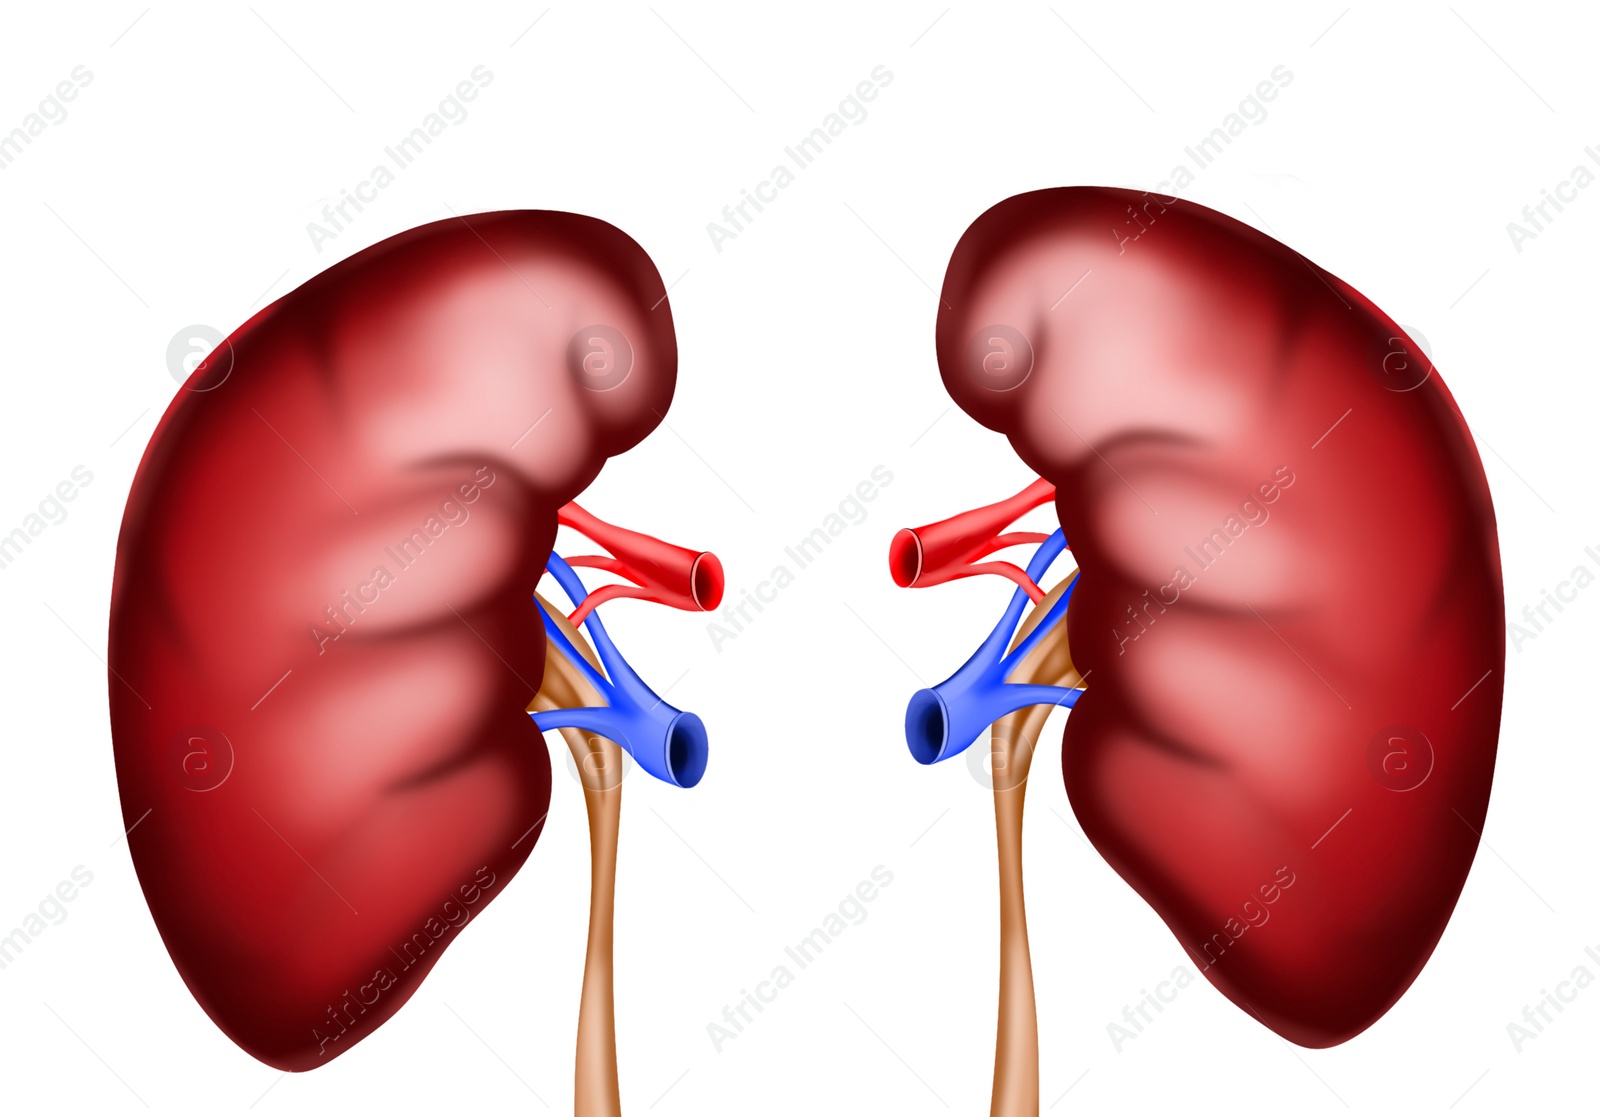 Illustration of  kidneys on white background. Human anatomy